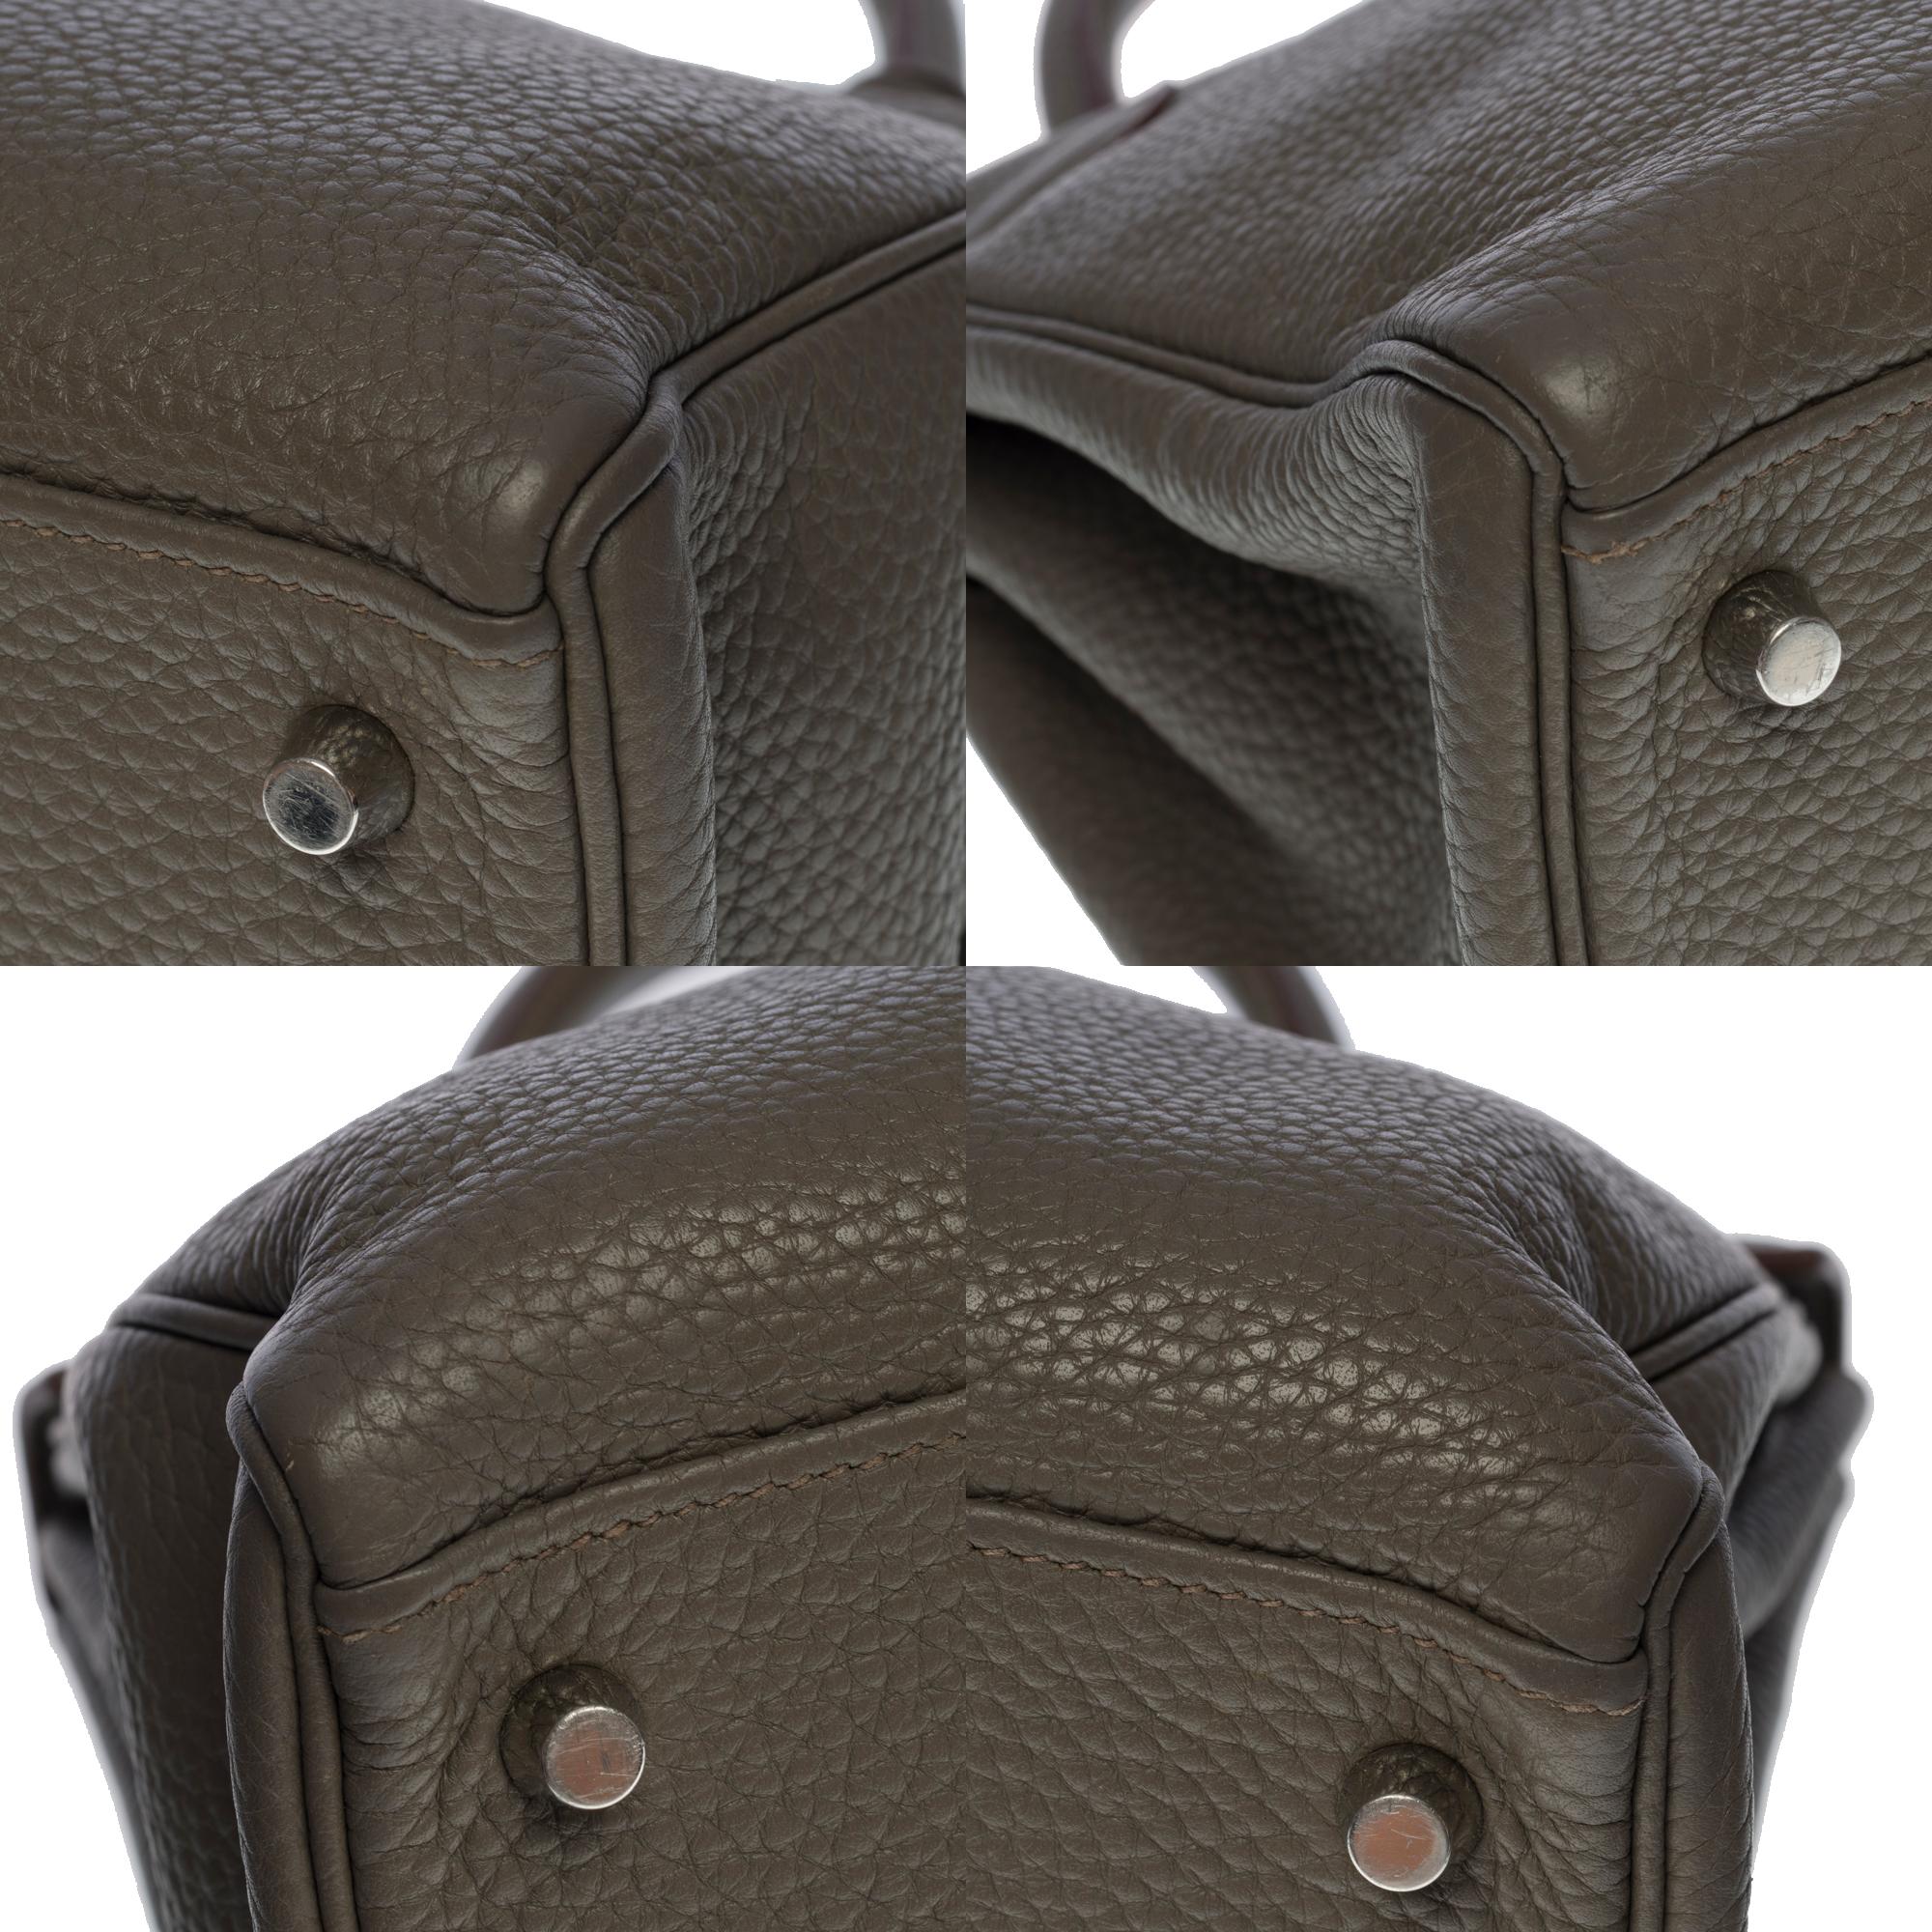 Exquisite Hermès Kelly 32cm retourne handbag strap in Etain Togo leather, SHW 3